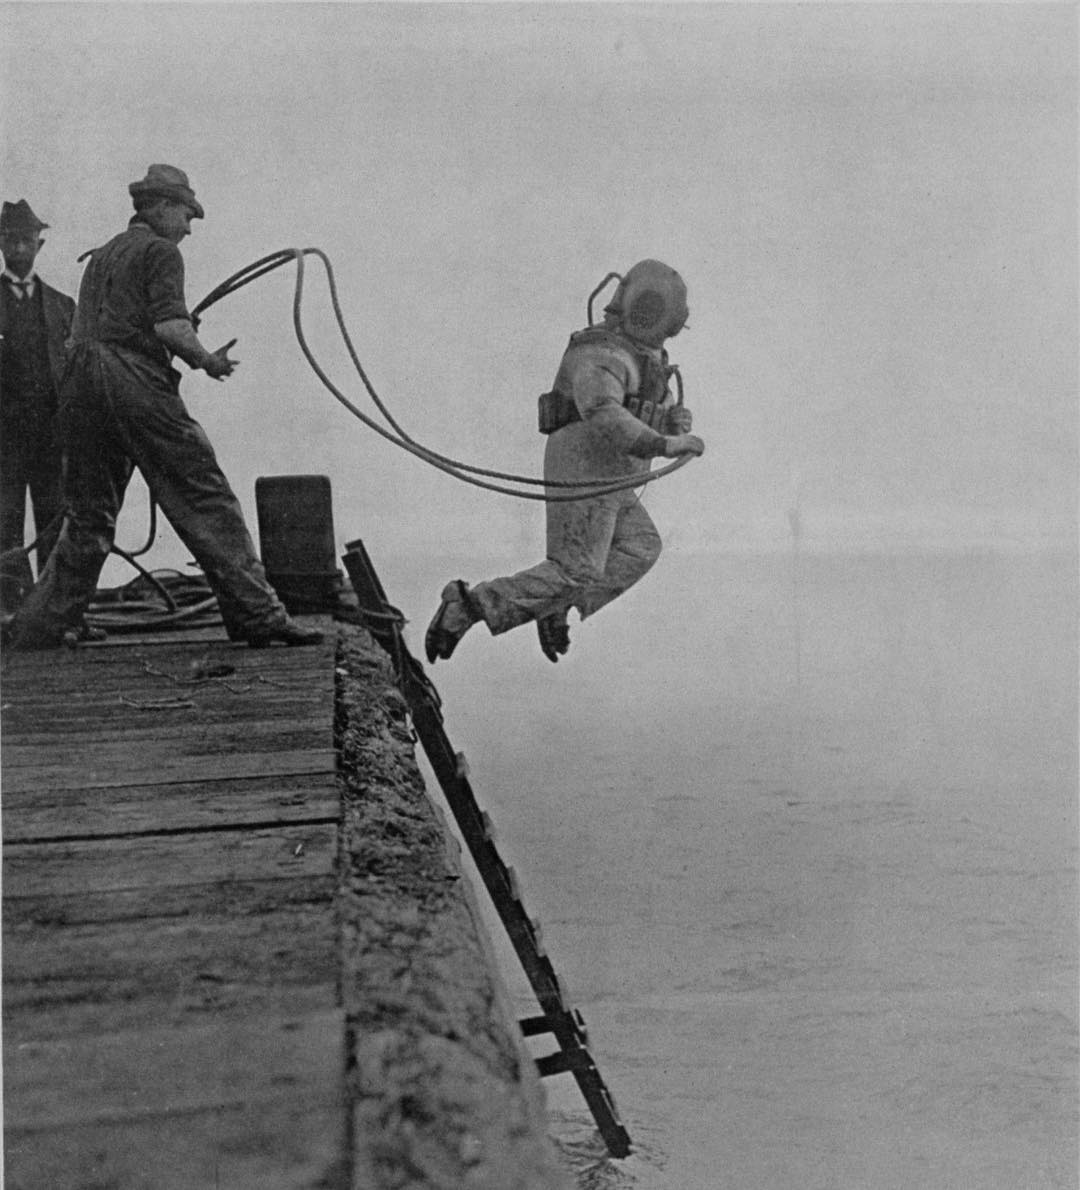 Deep sea diver entering the water 1915